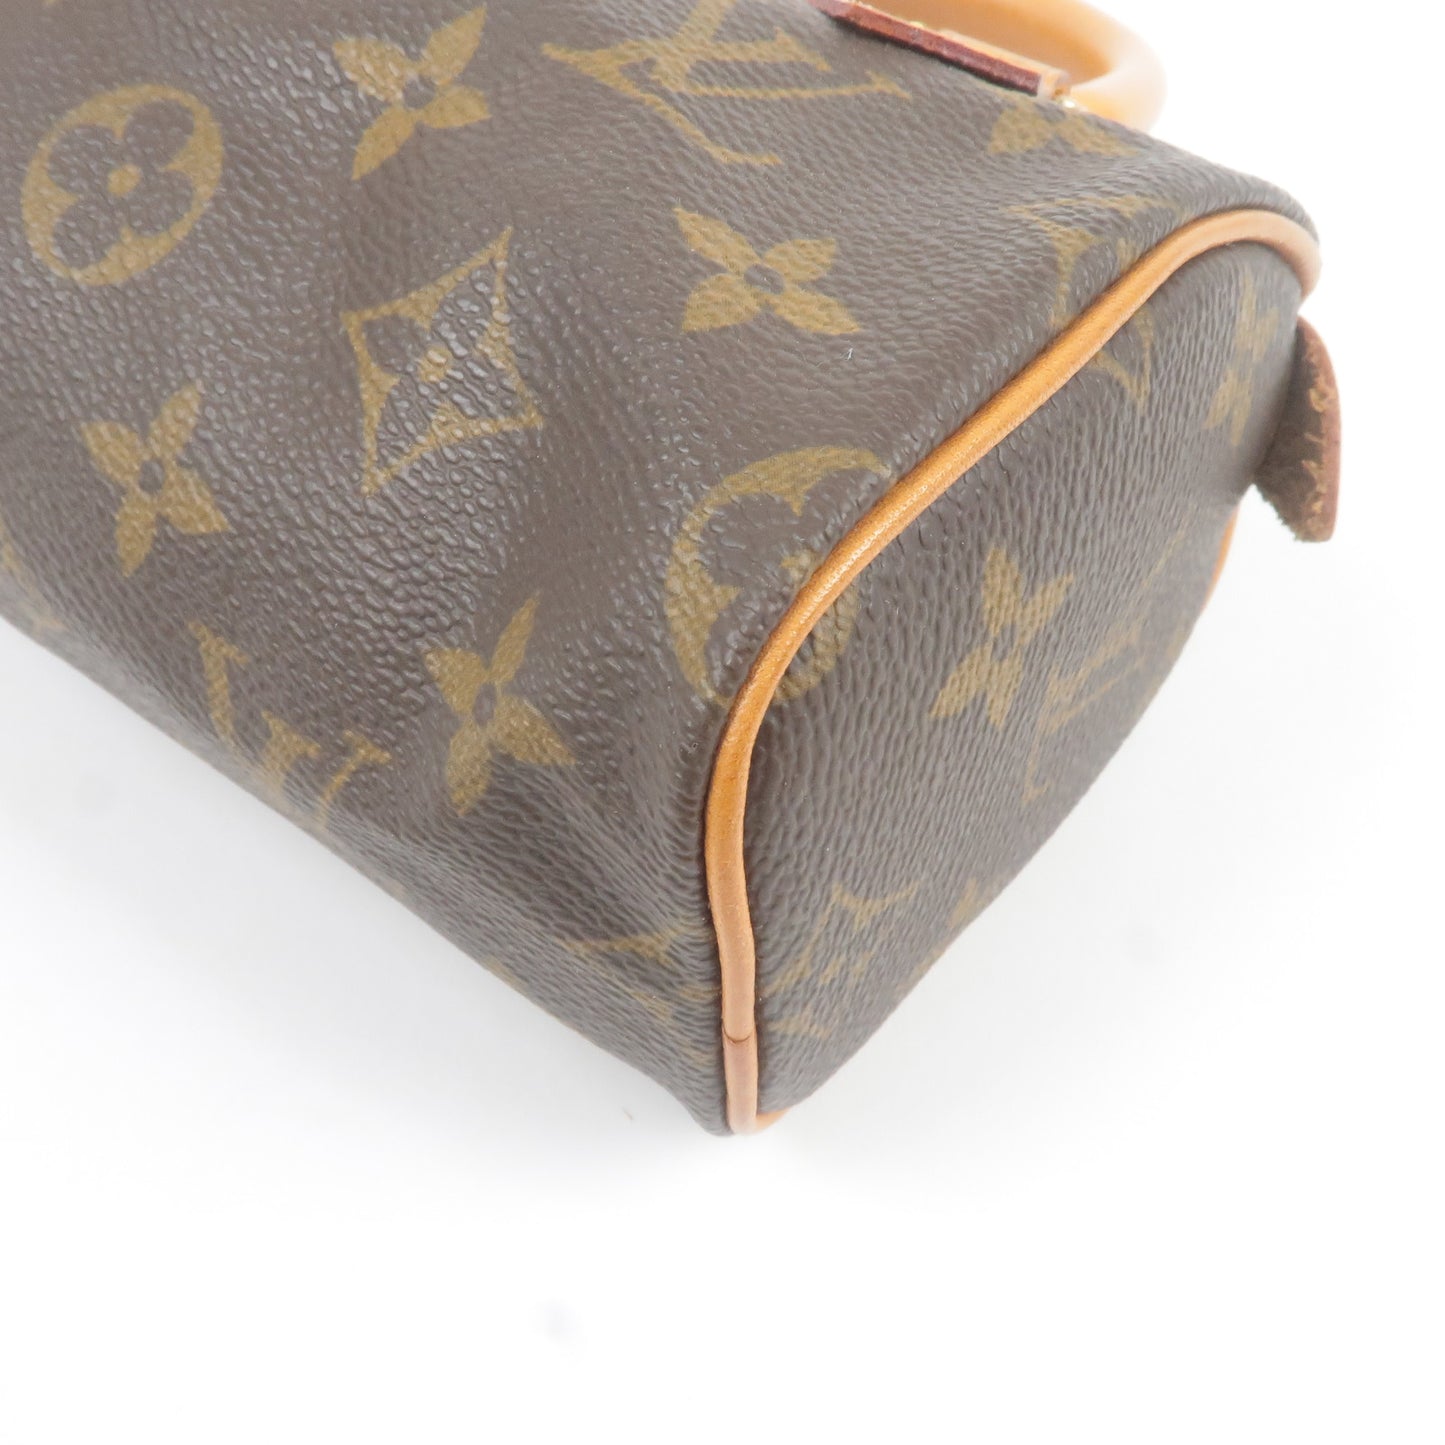 Louis Vuitton Monogram Mini Speedy Hand Bag Mini Bag M41534